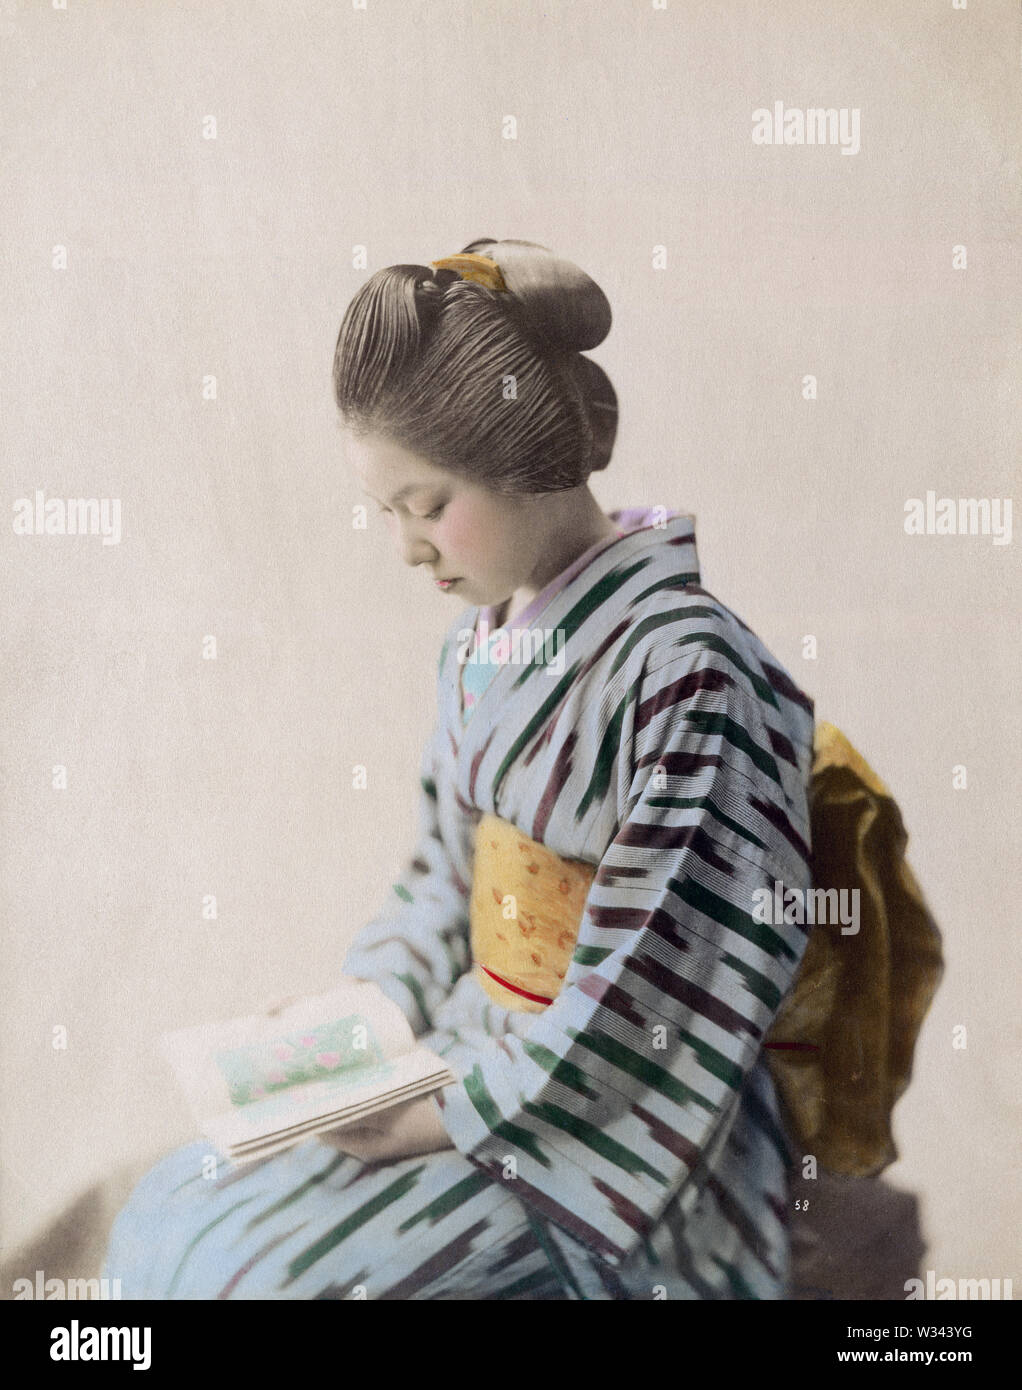 [1890s Japan - Japanische Frau im Kimono] - junge japanische Frau im Kimono und traditionelle Frisur, ein Buch zu lesen. 19 Vintage albumen Foto. Stockfoto